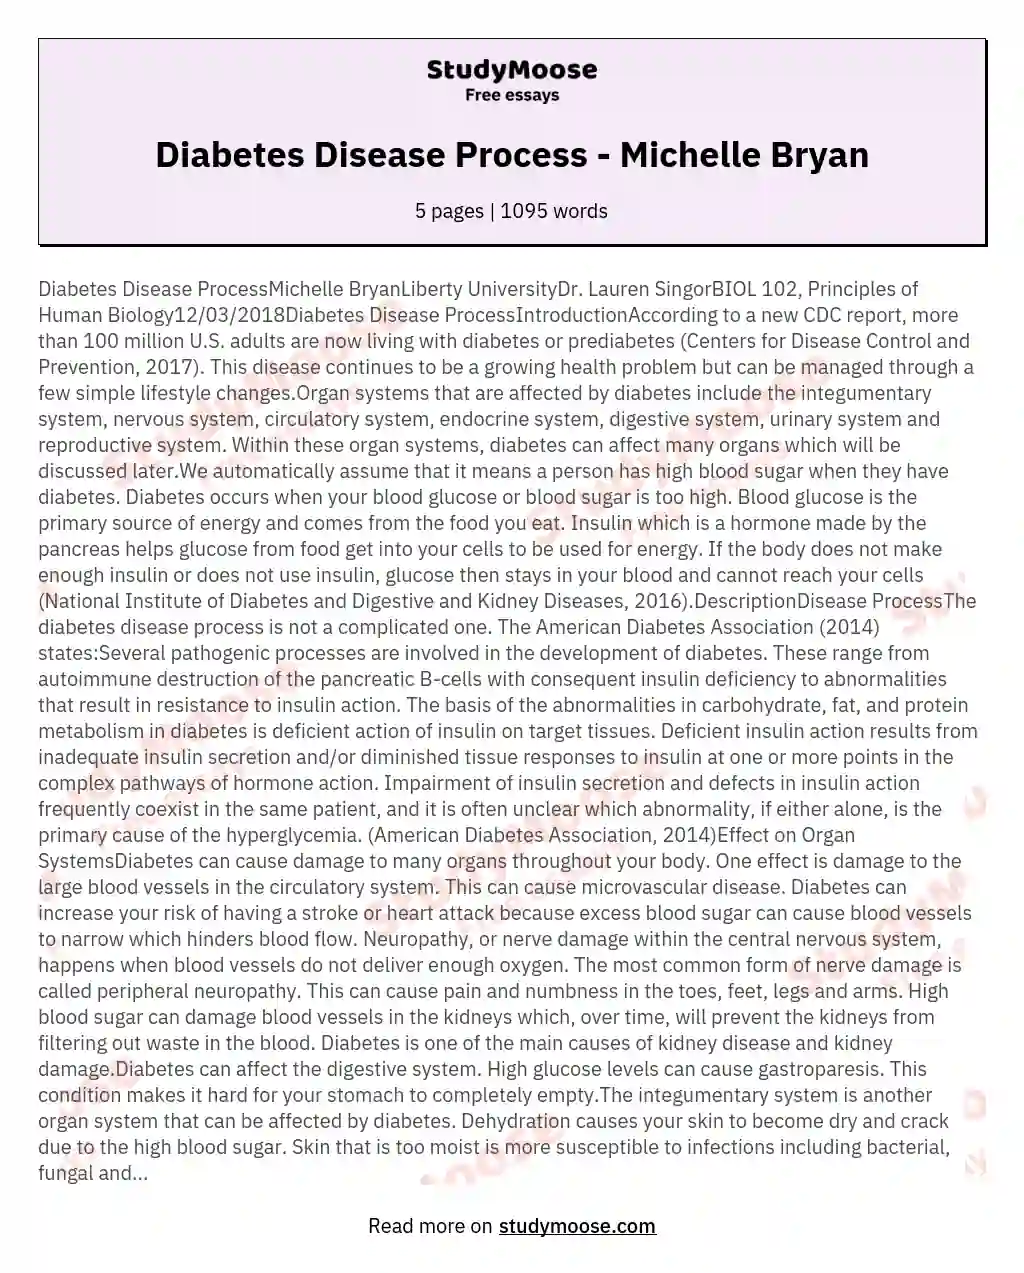 Diabetes Disease Process - Michelle Bryan essay